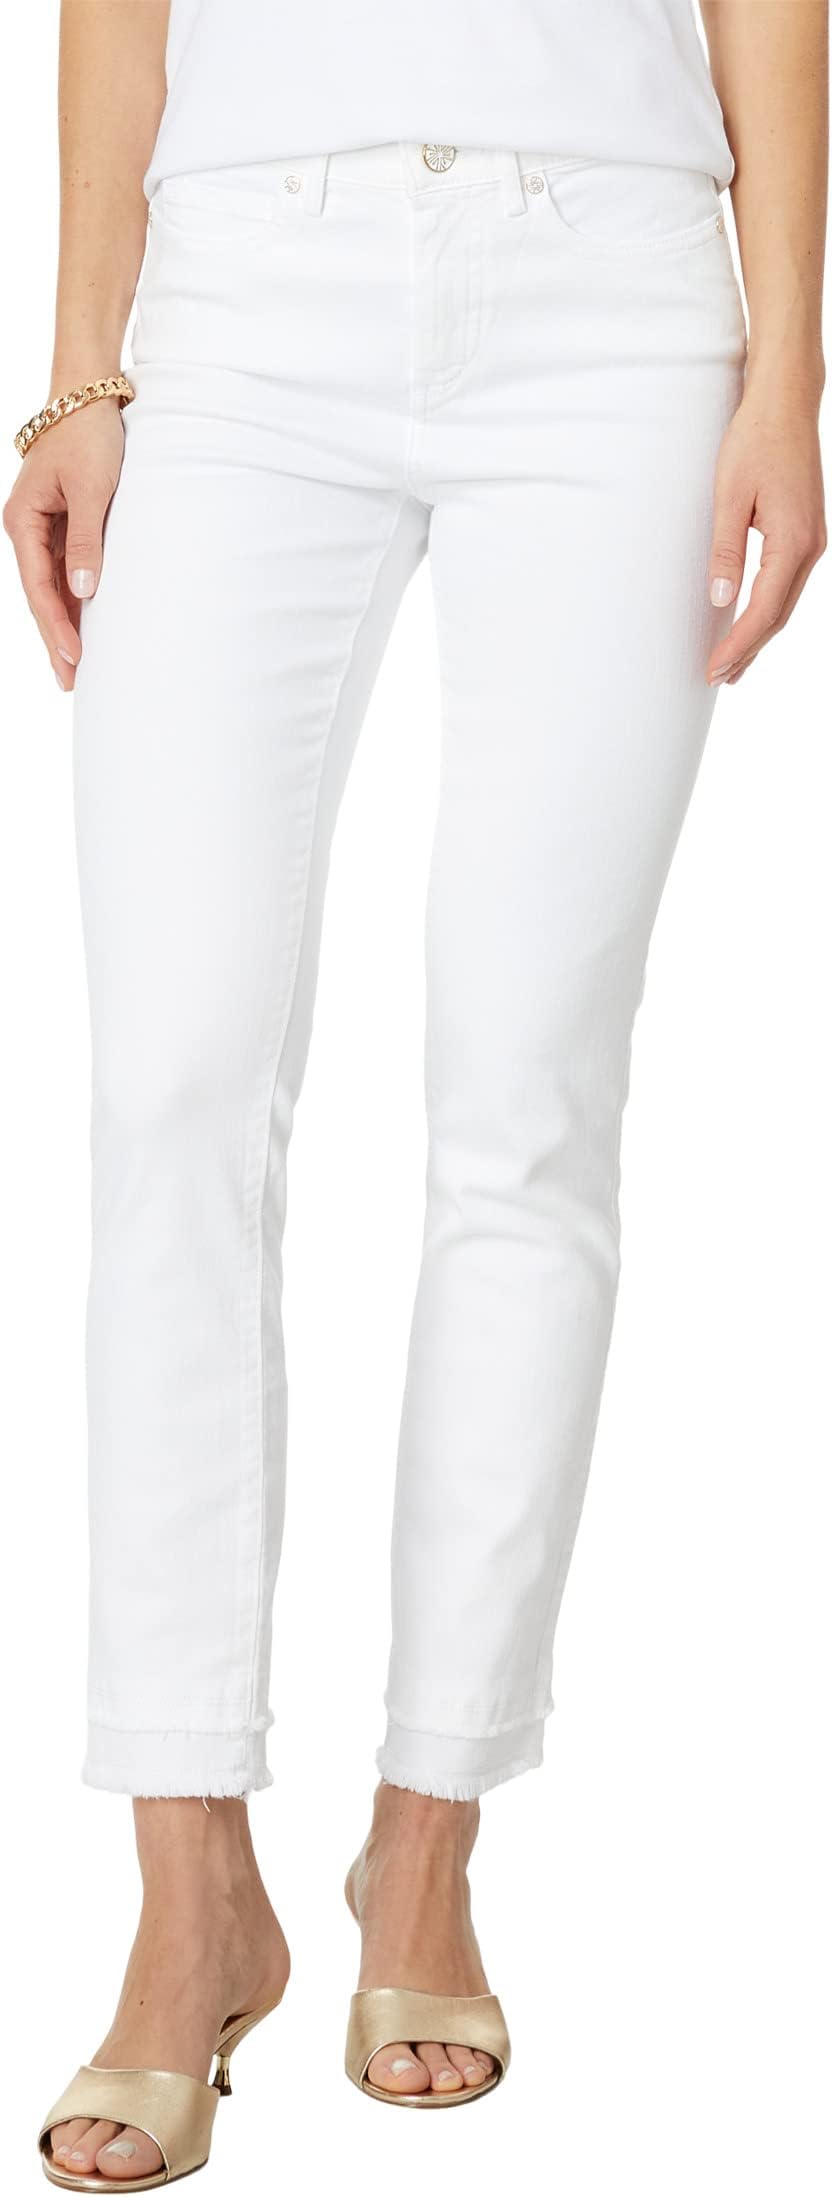 ocean sonic resort Джинсы South Ocean High-Rise Skinny Jeans in Resort White Lilly Pulitzer, цвет Resort White